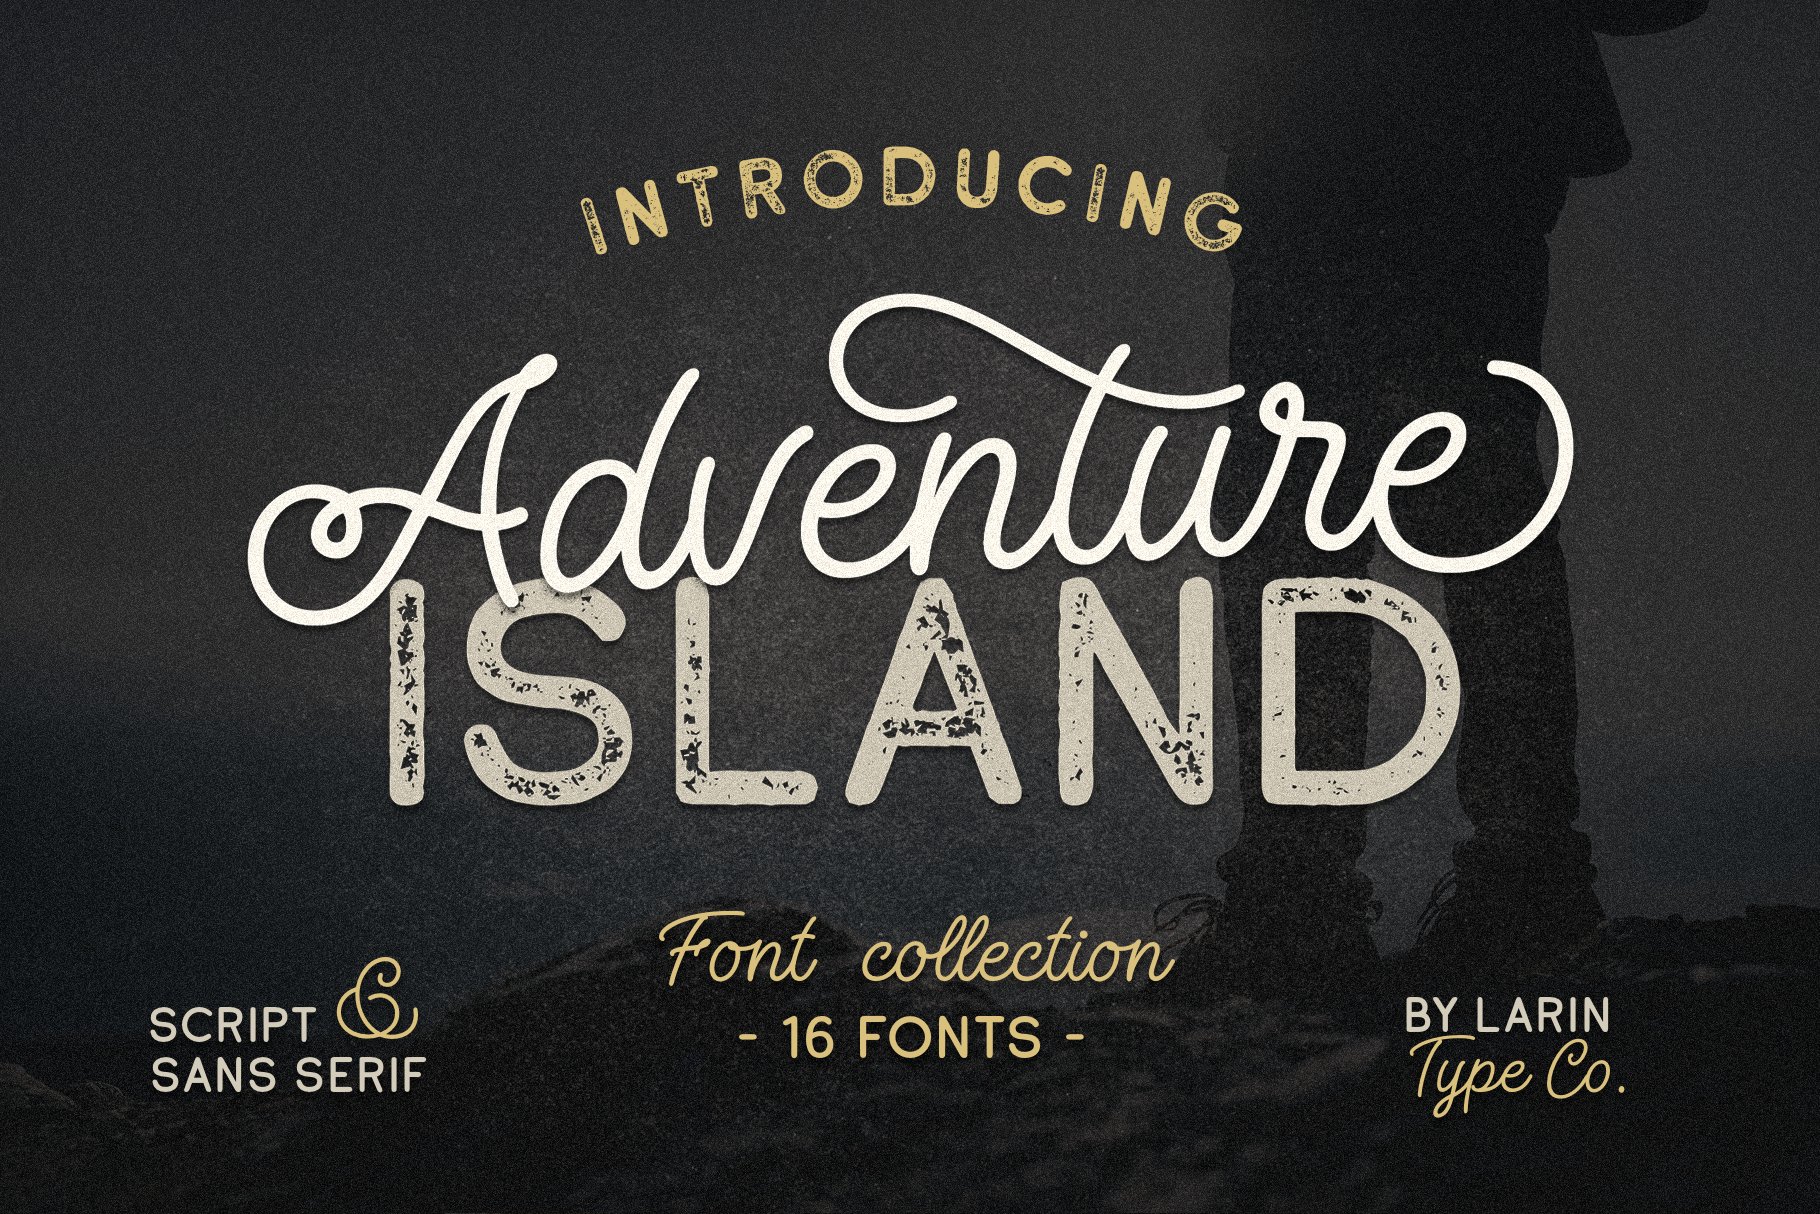 Adventure Island cover image.